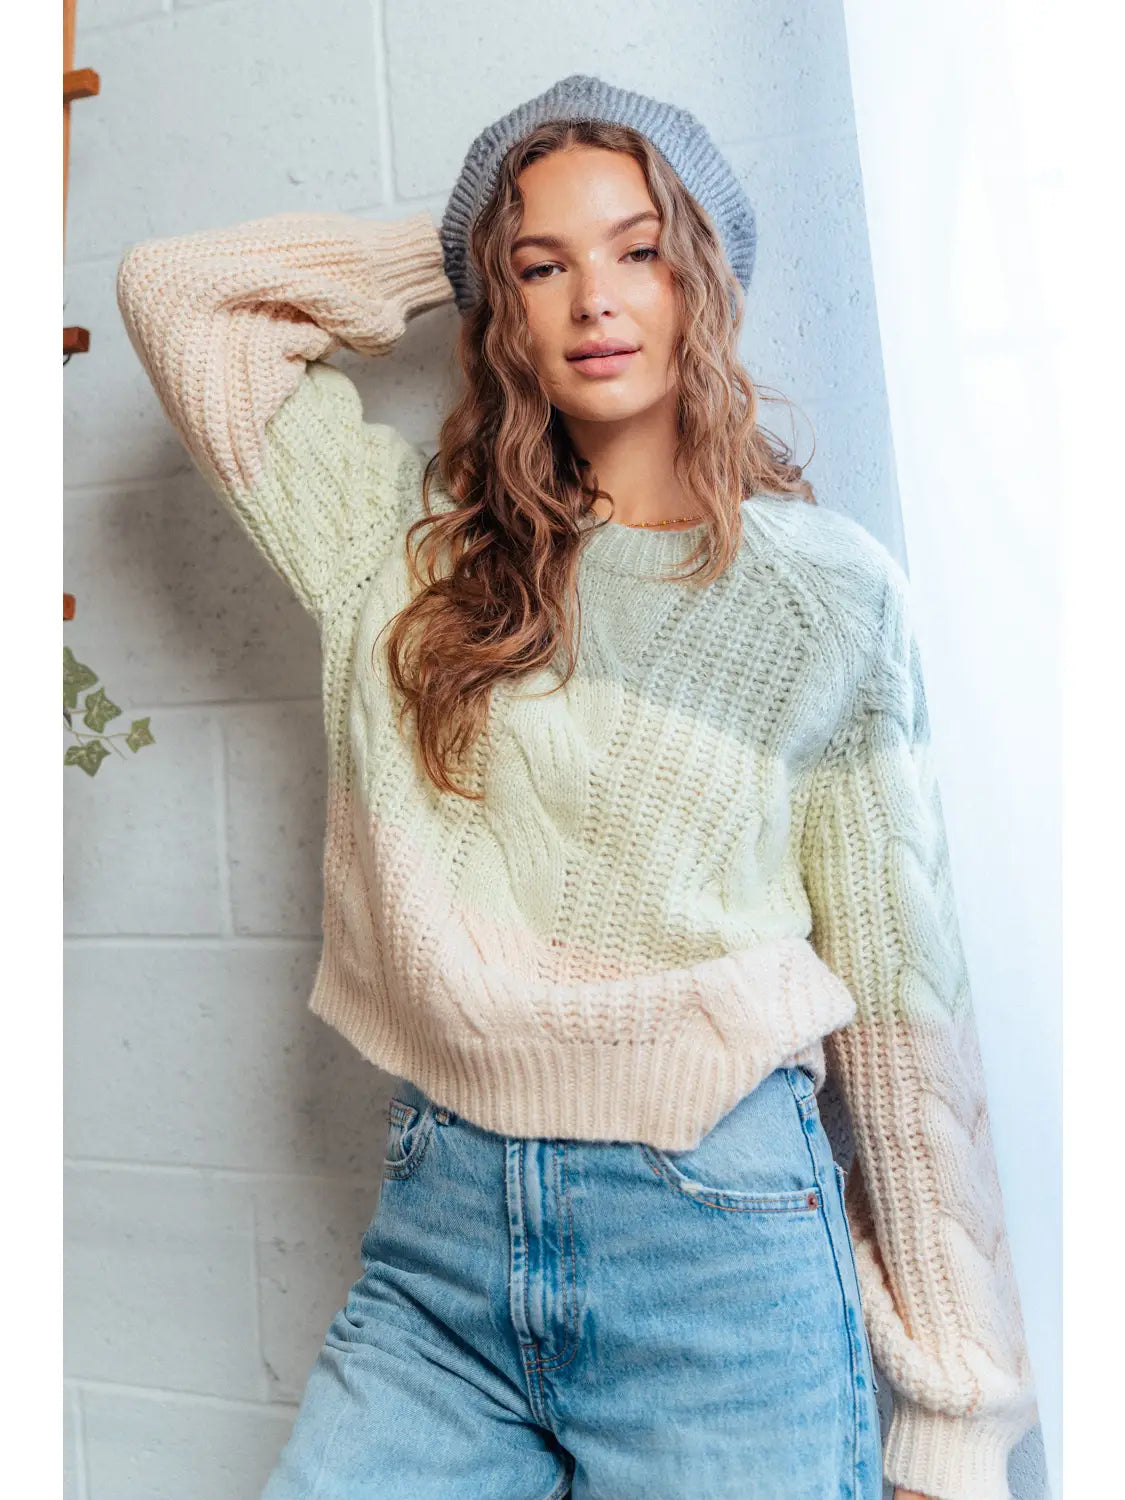 Casie Colorblock Sweater